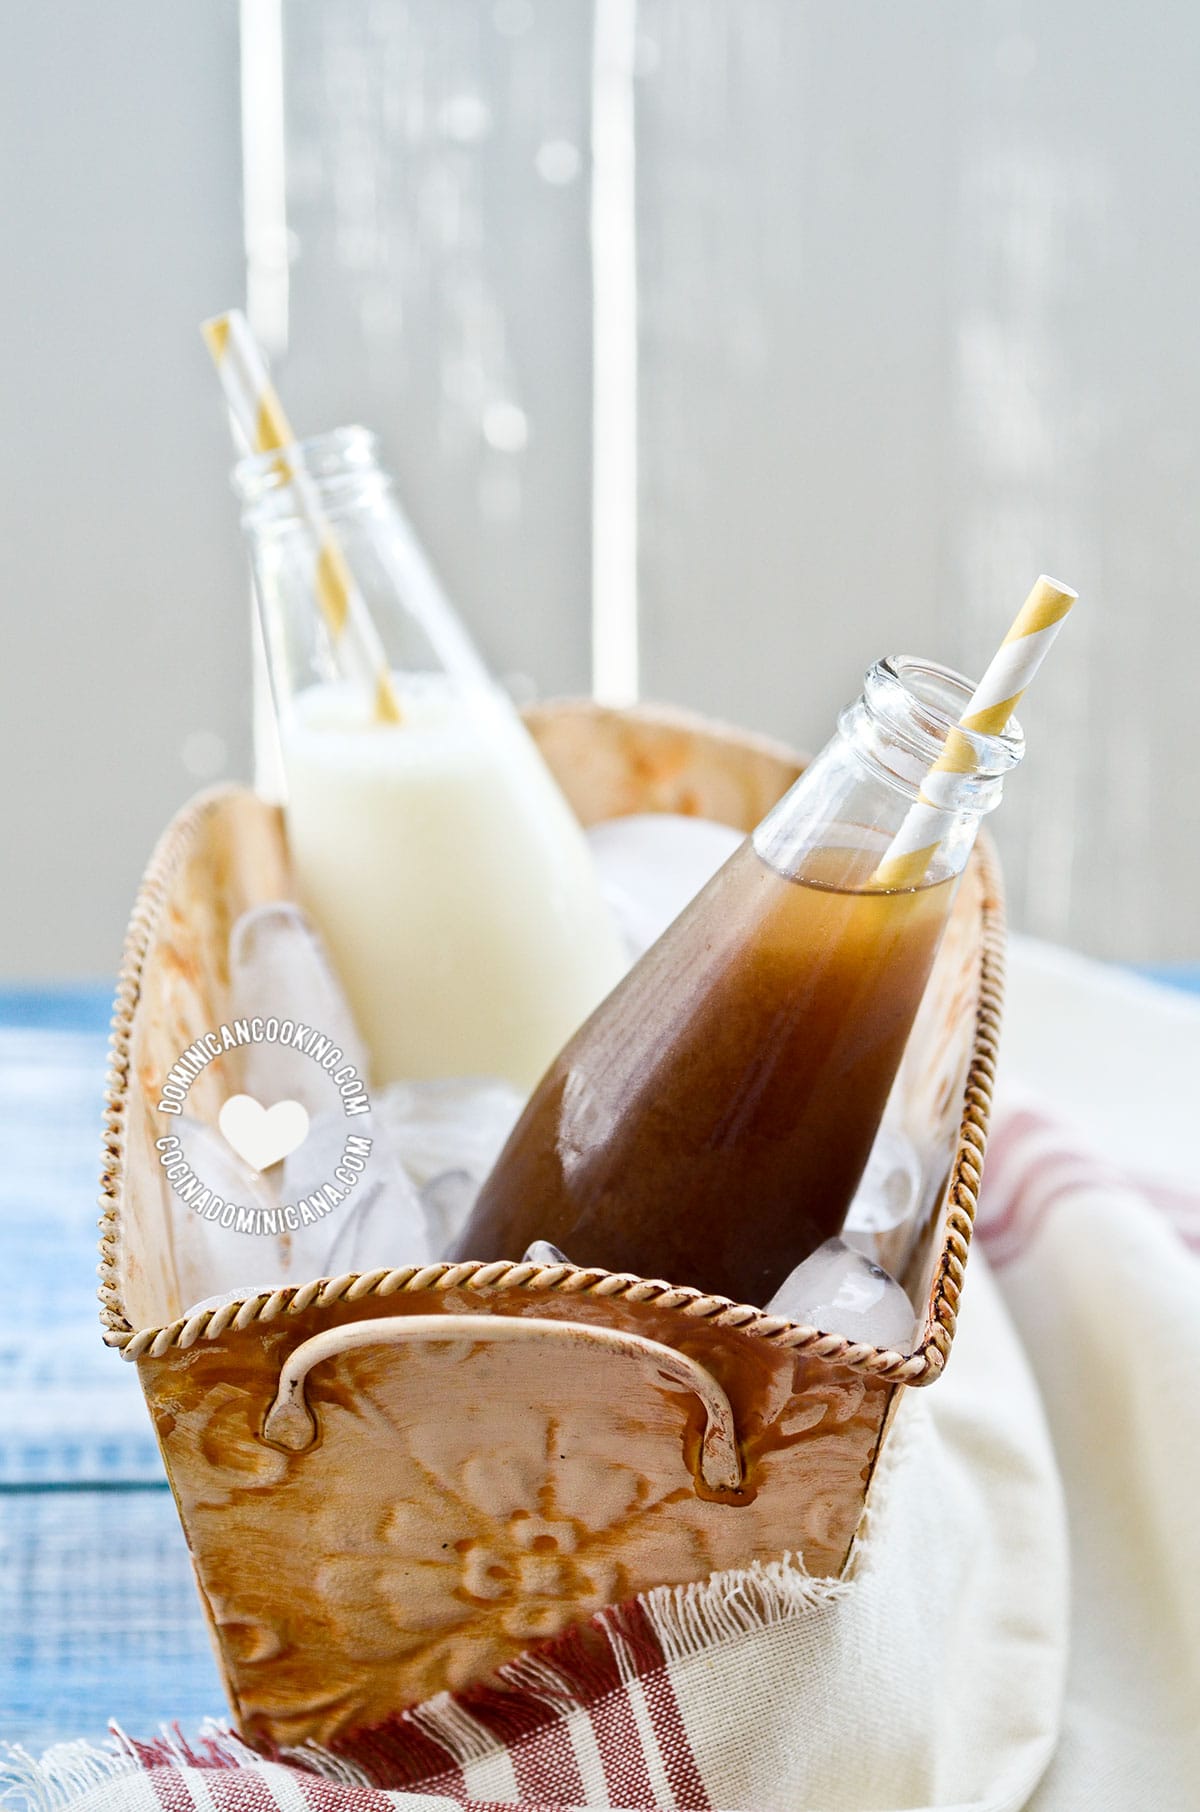 bottle of champola de tamarindo (tamarind juice)